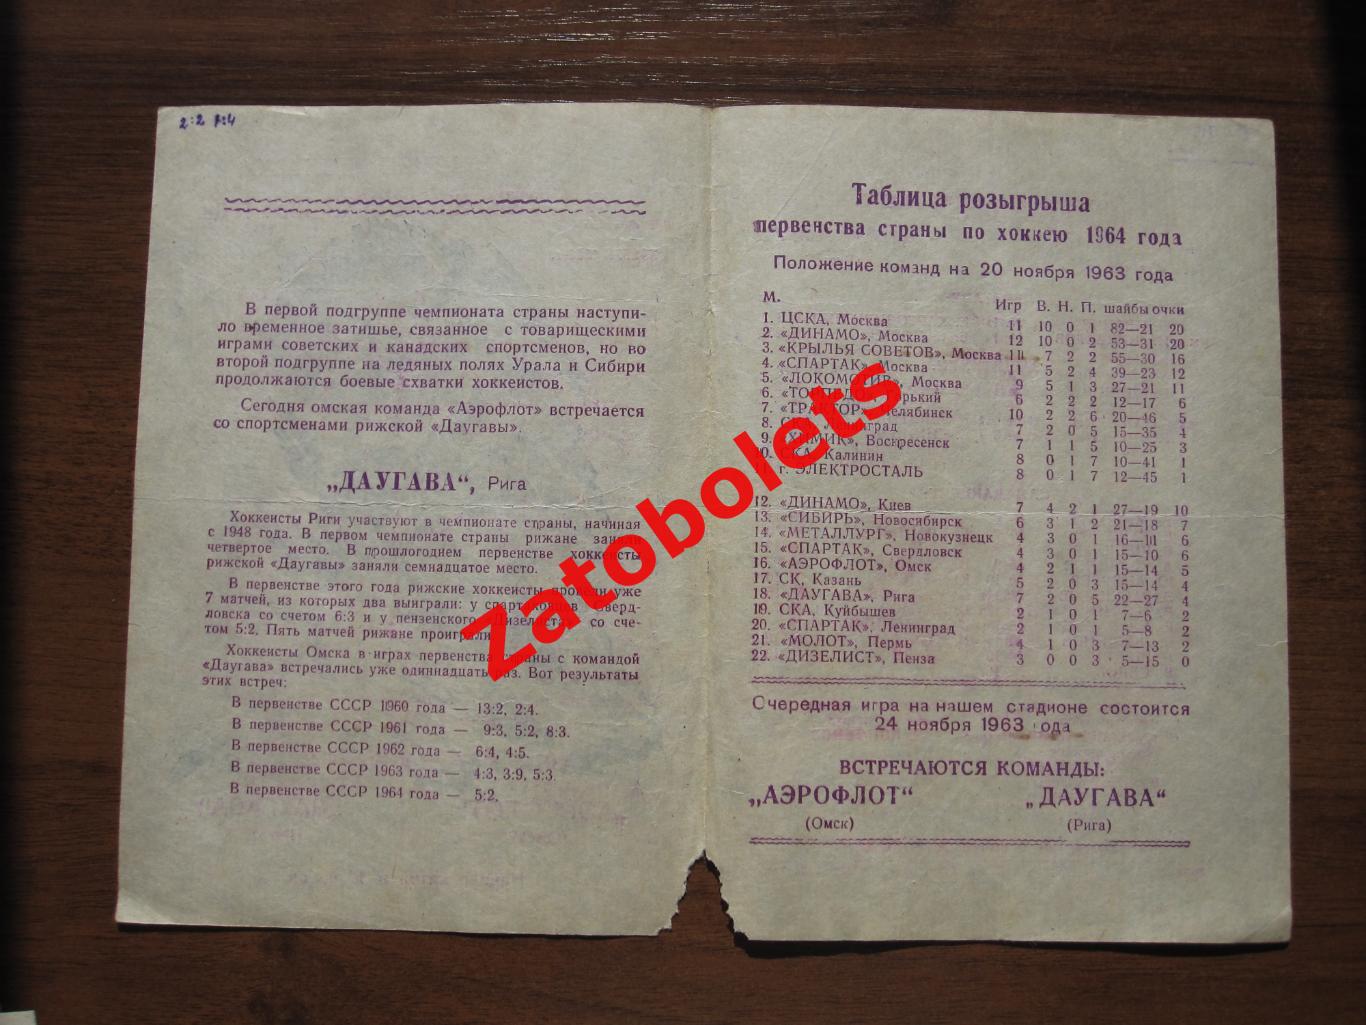 Аэрофлот Омск - Даугава Рига 22.11.1963 1